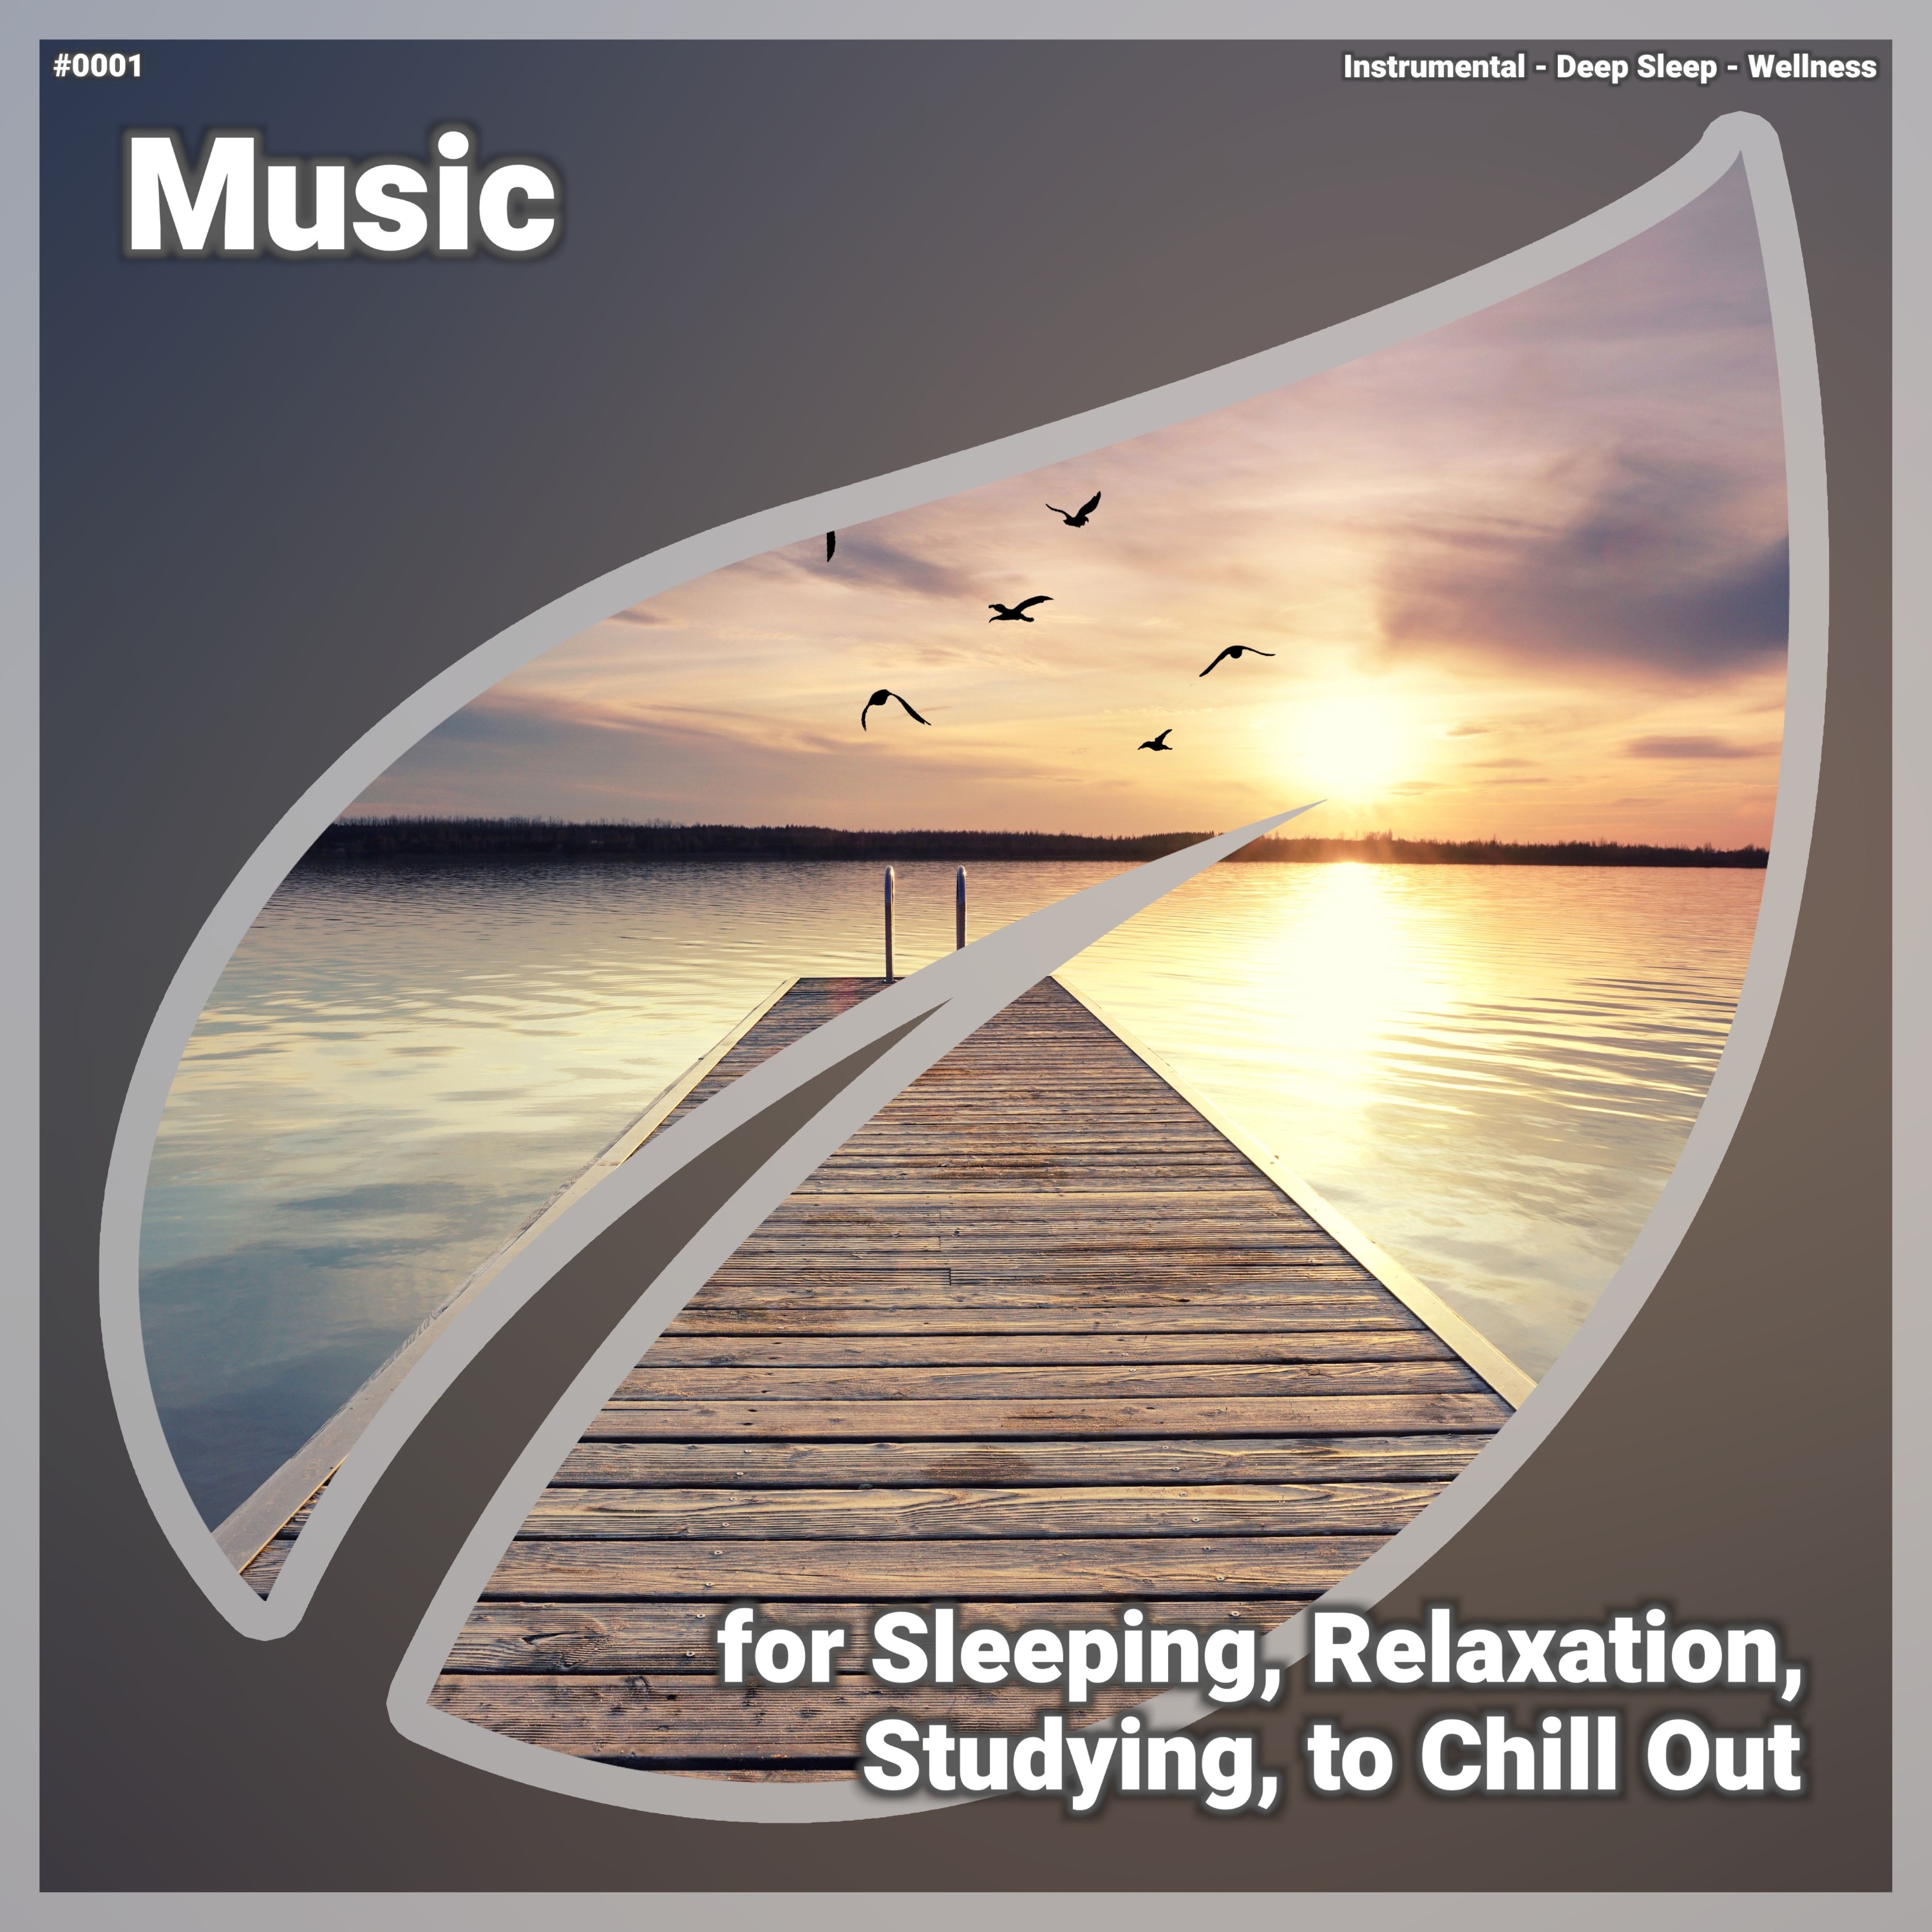 डाउनलोड करा Relaxing Music, Pt. 71